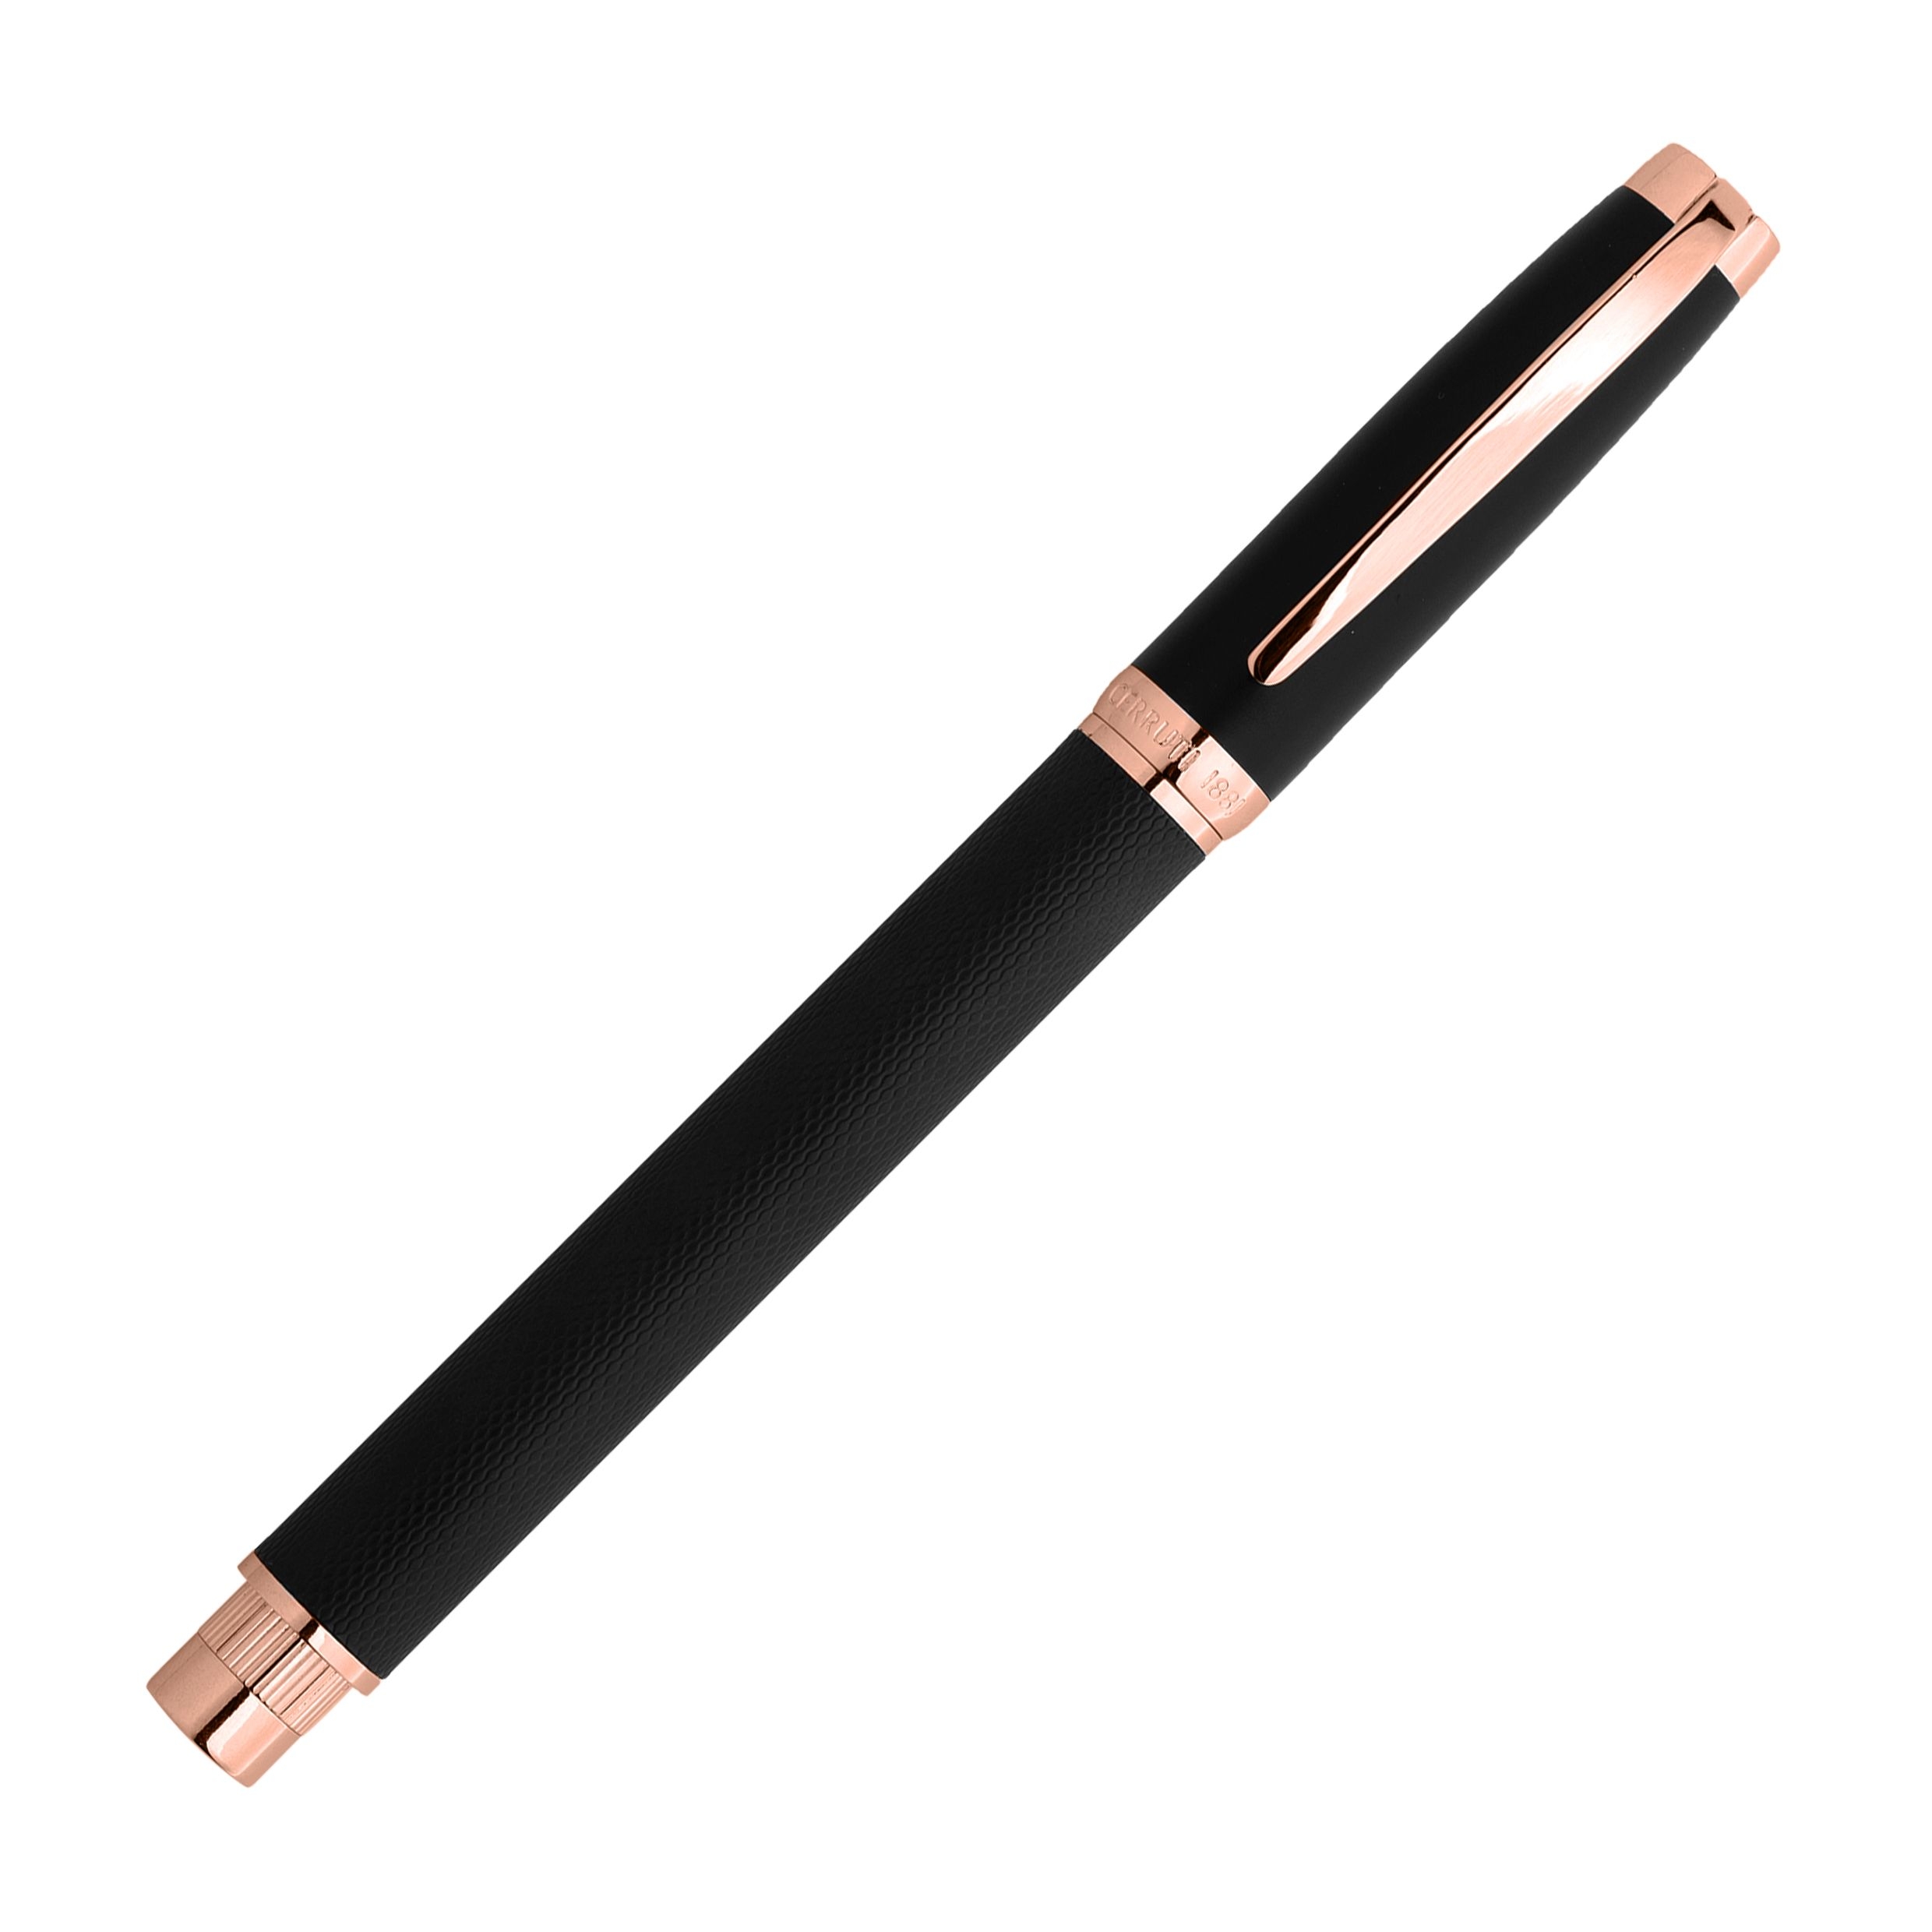 CERRUTI 1881 Pens & Leather Accessories | Daffle World of pens